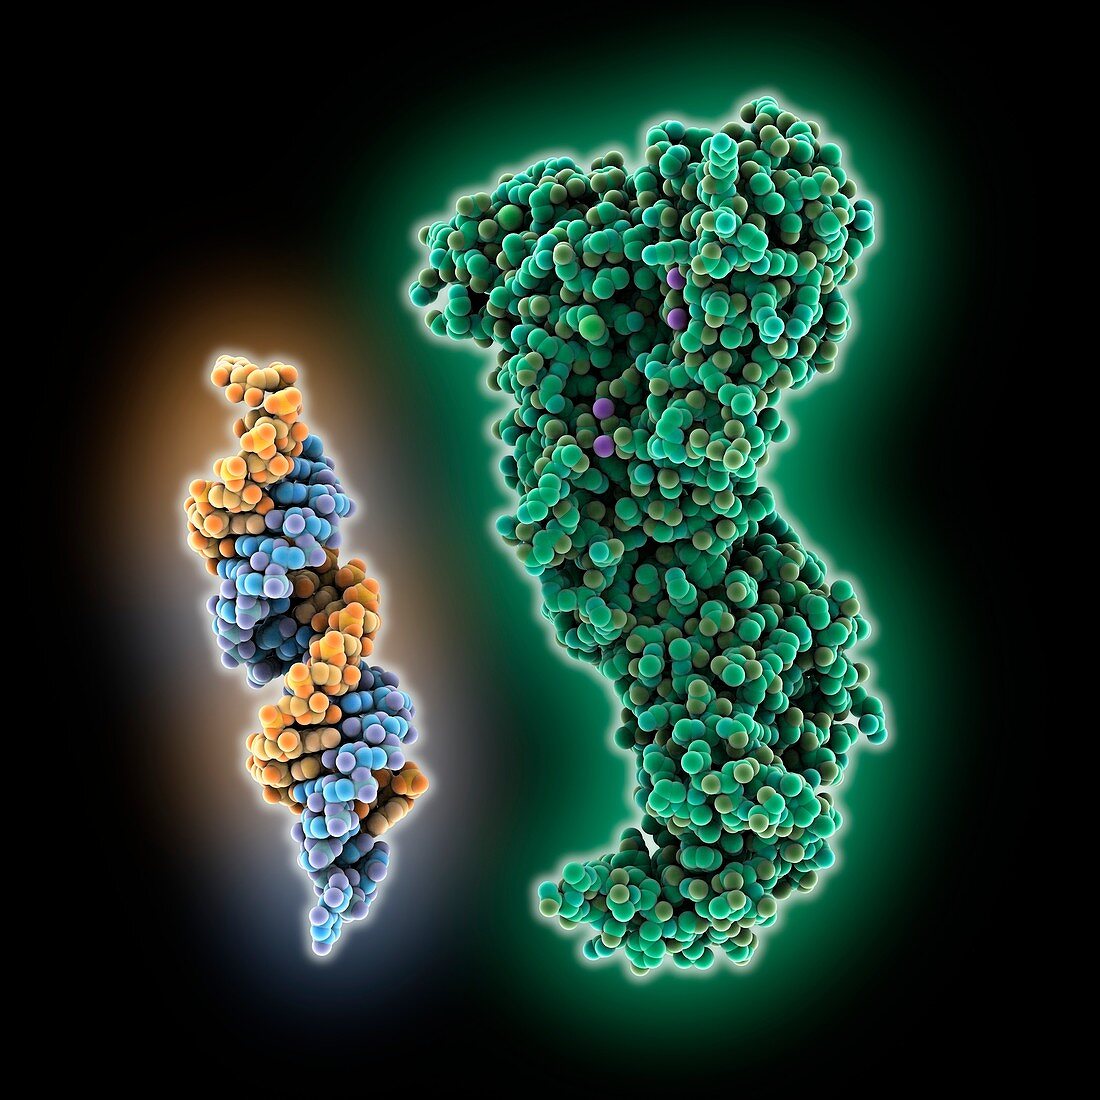 RNA interference molecules